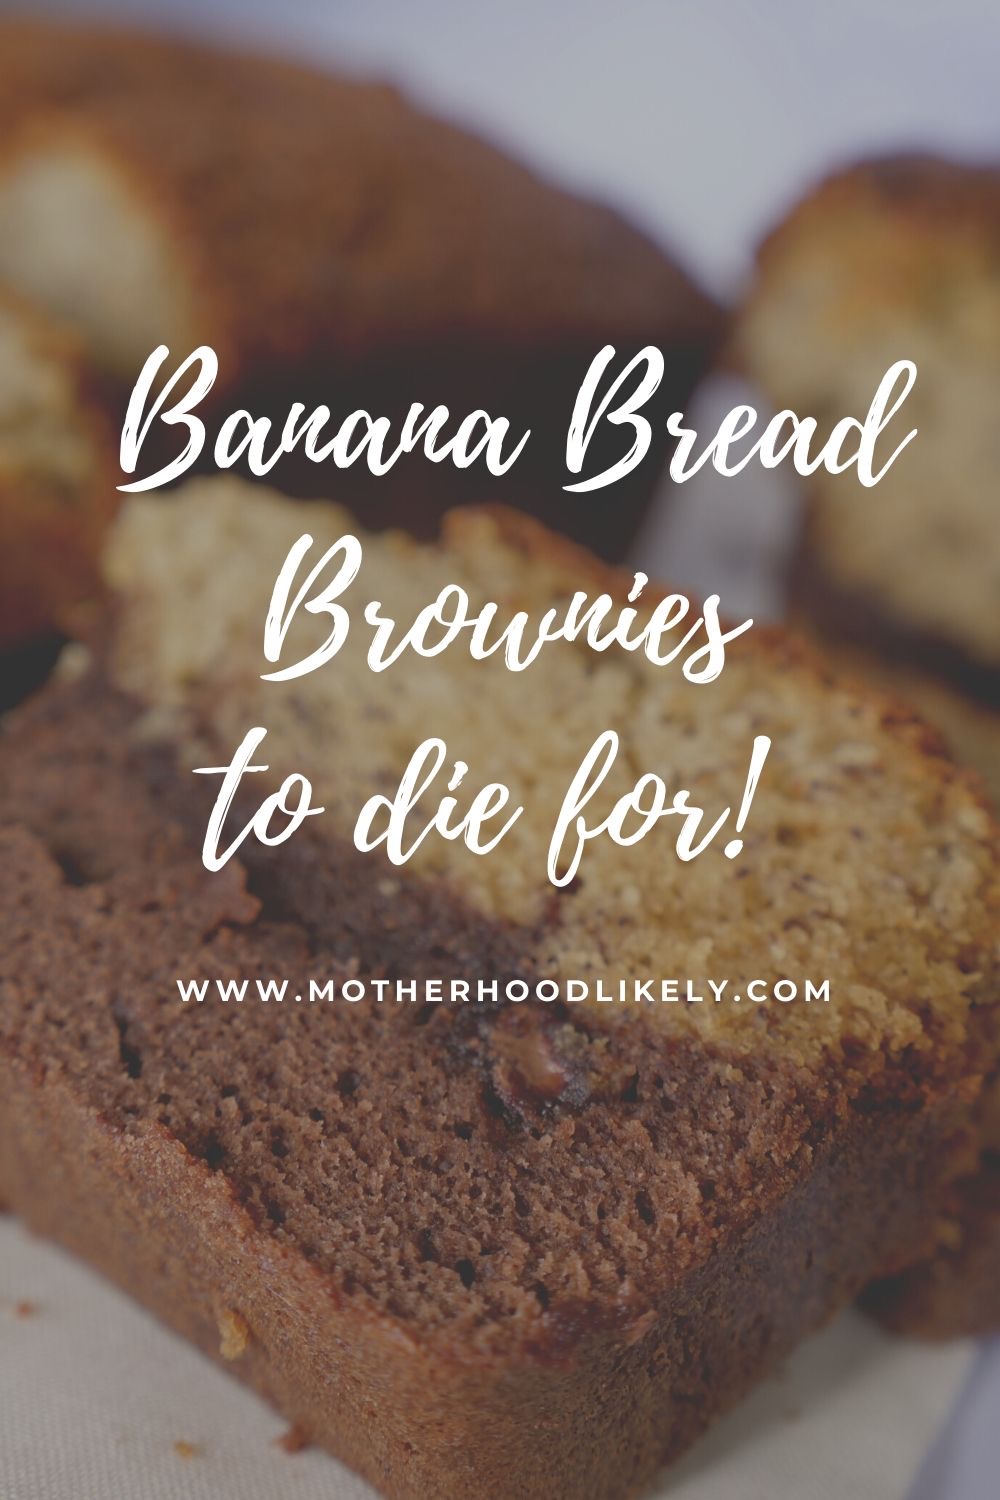 Banana Bread brownies